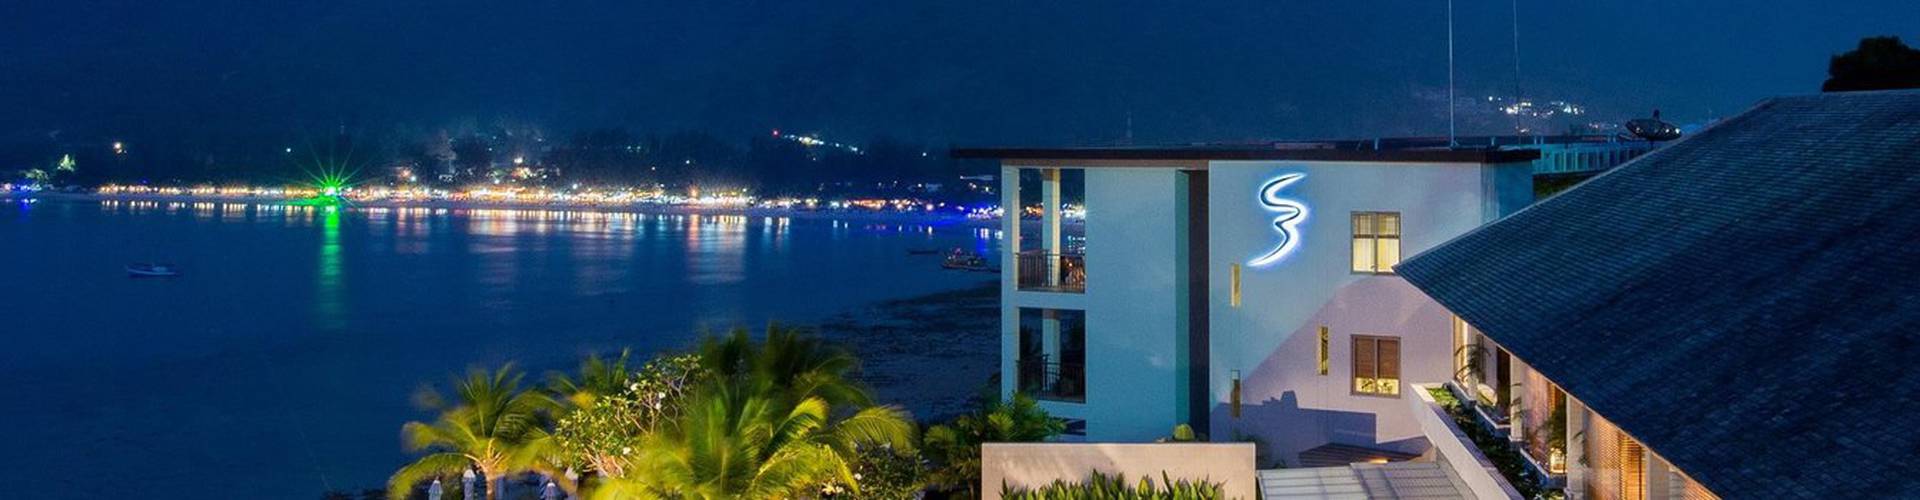 Cape Sienna Phuket Gourmet Hotel & Villas - Phuket - Photos